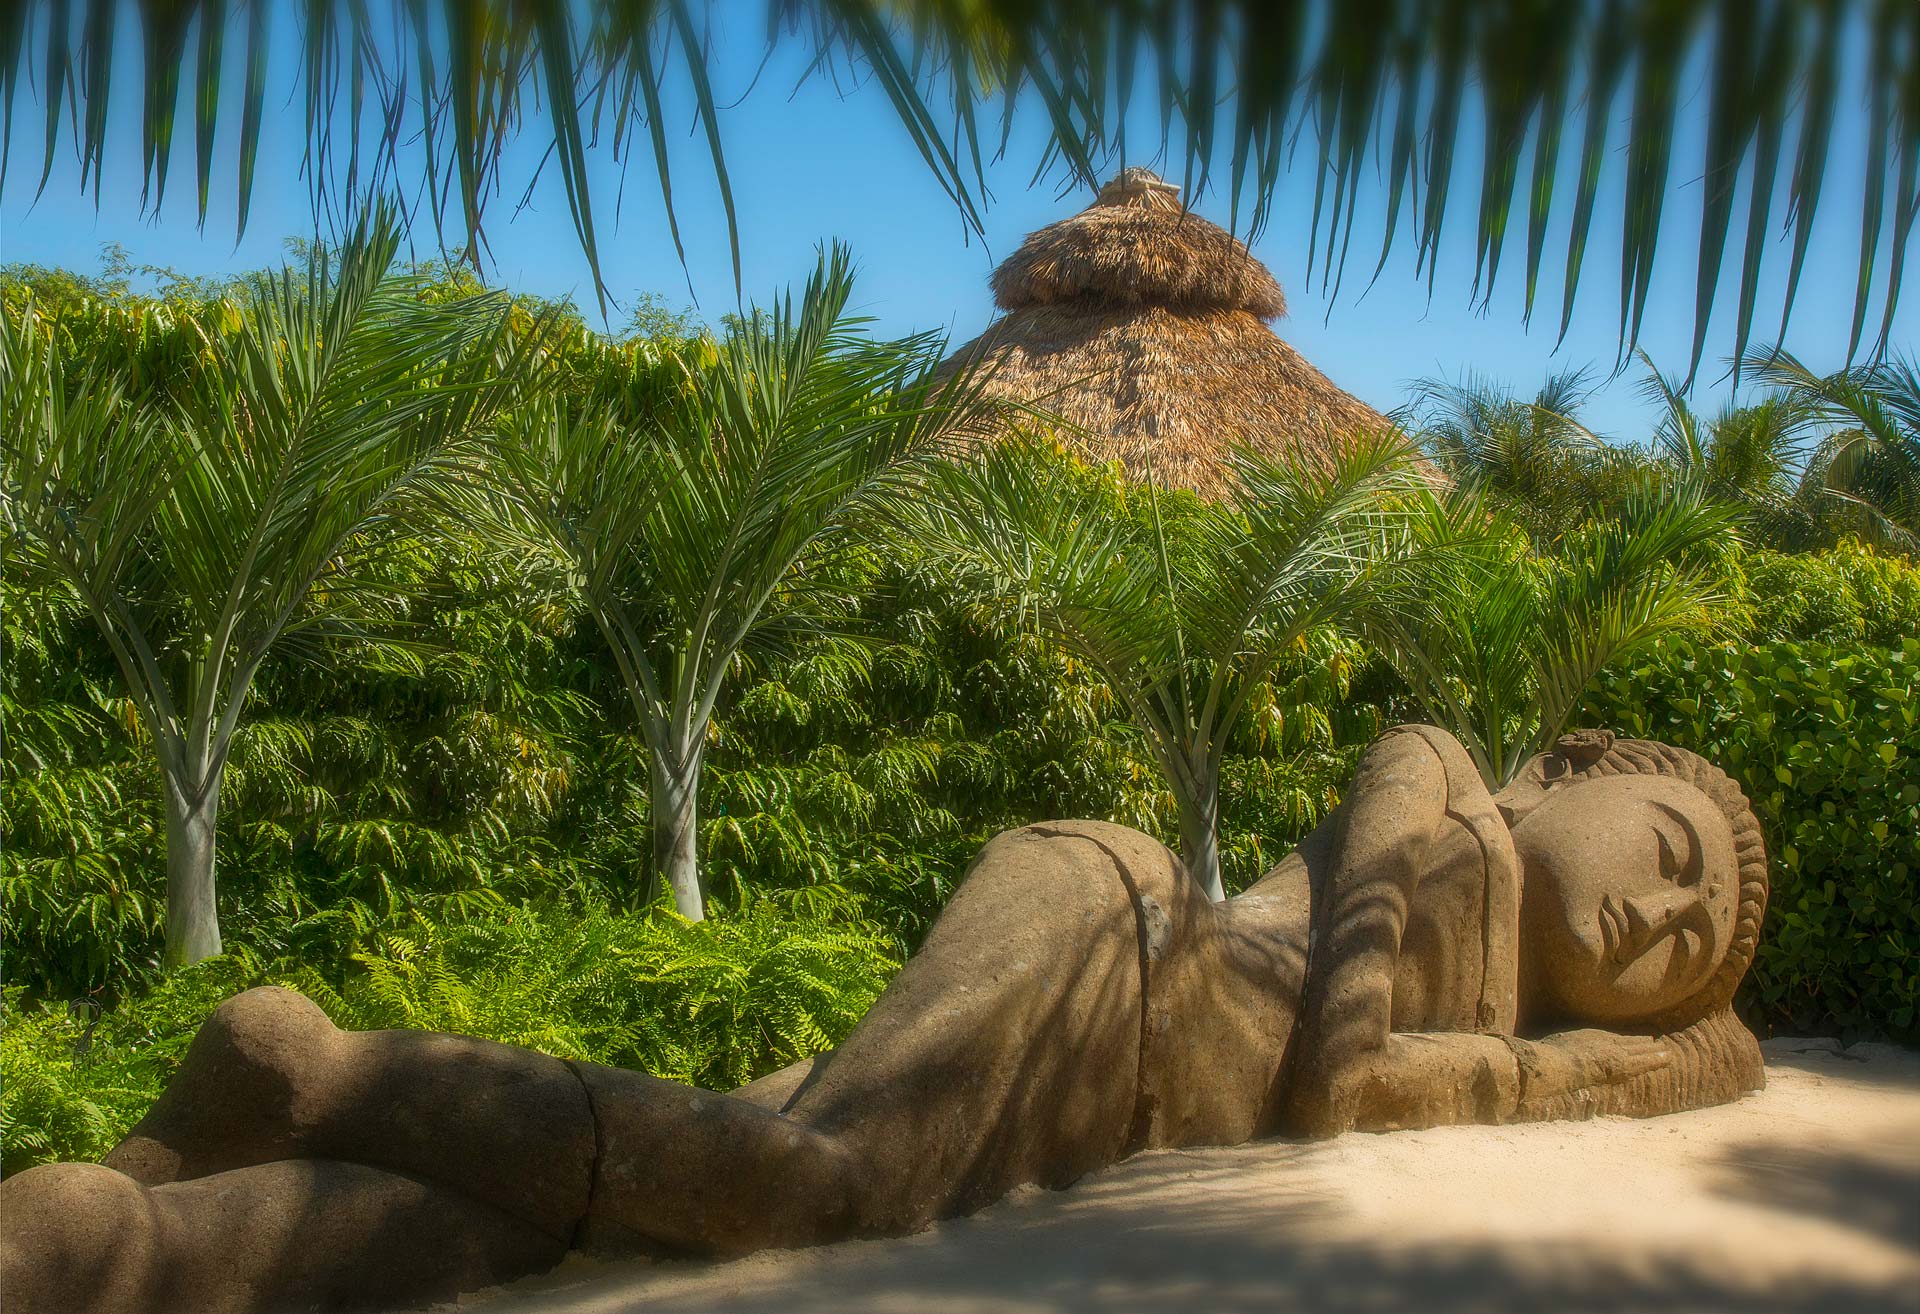 large sleeping statue on a sandy beach